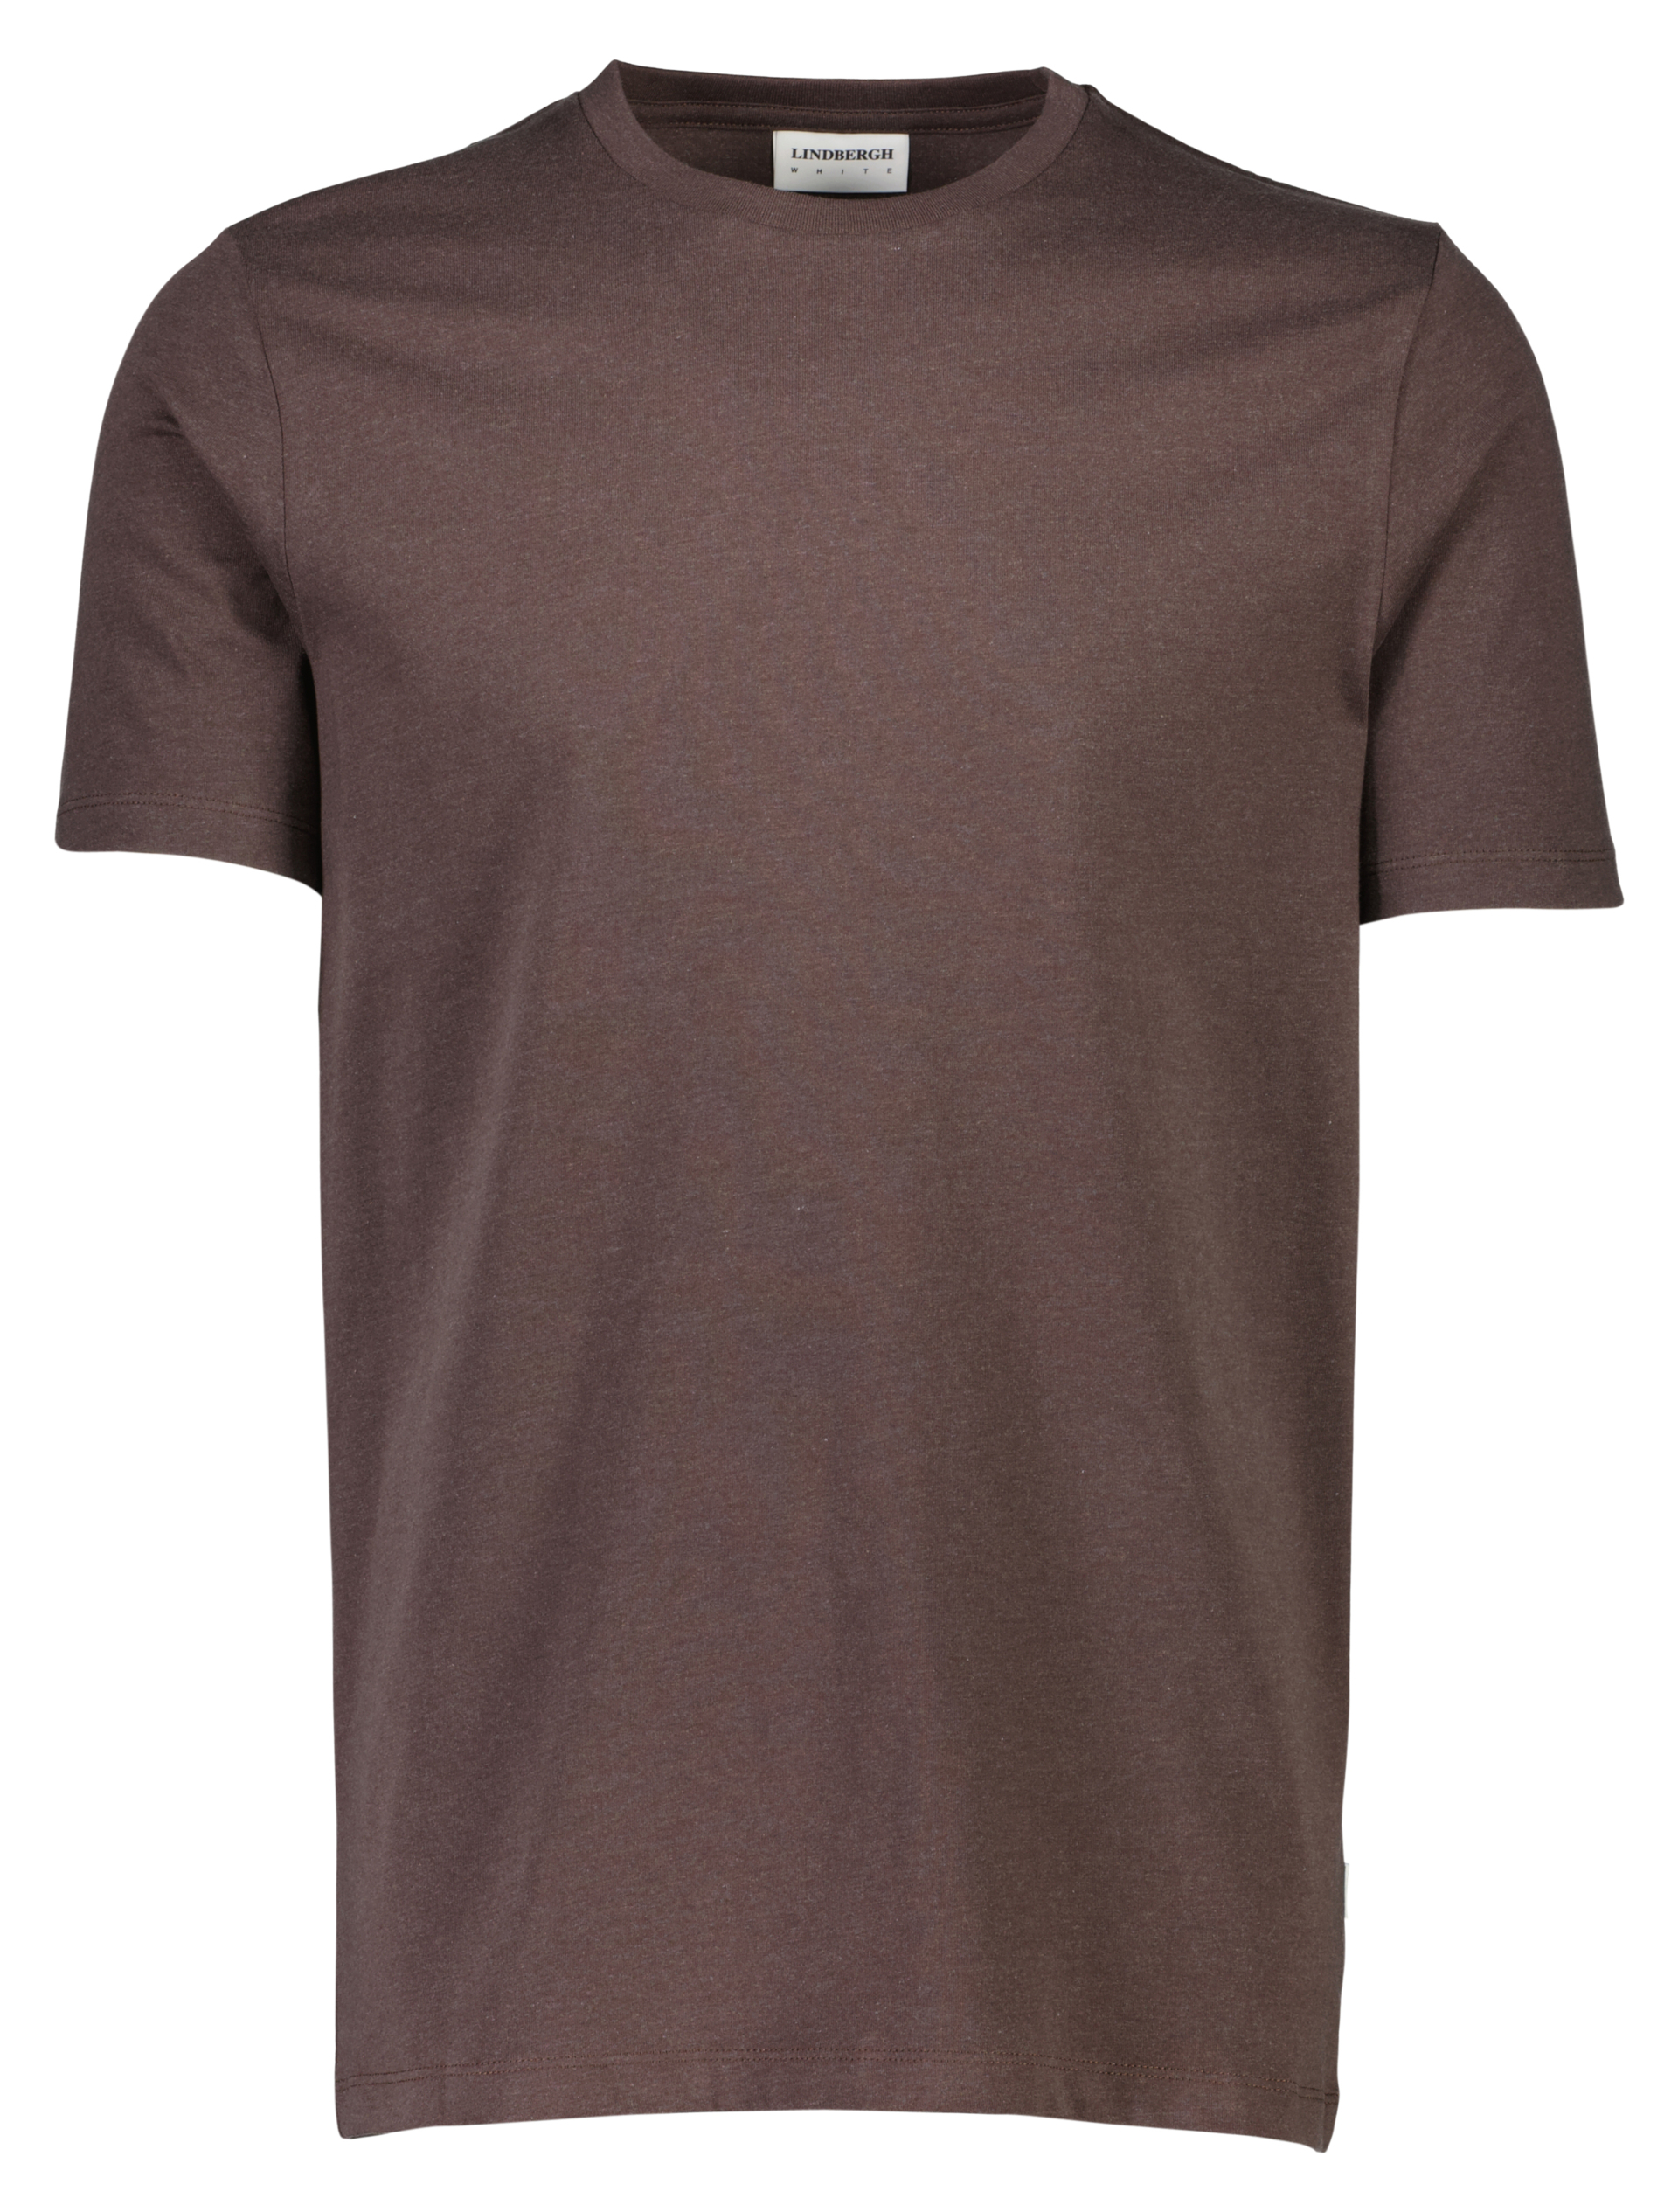 Lindbergh T-shirt bruin / brown mel